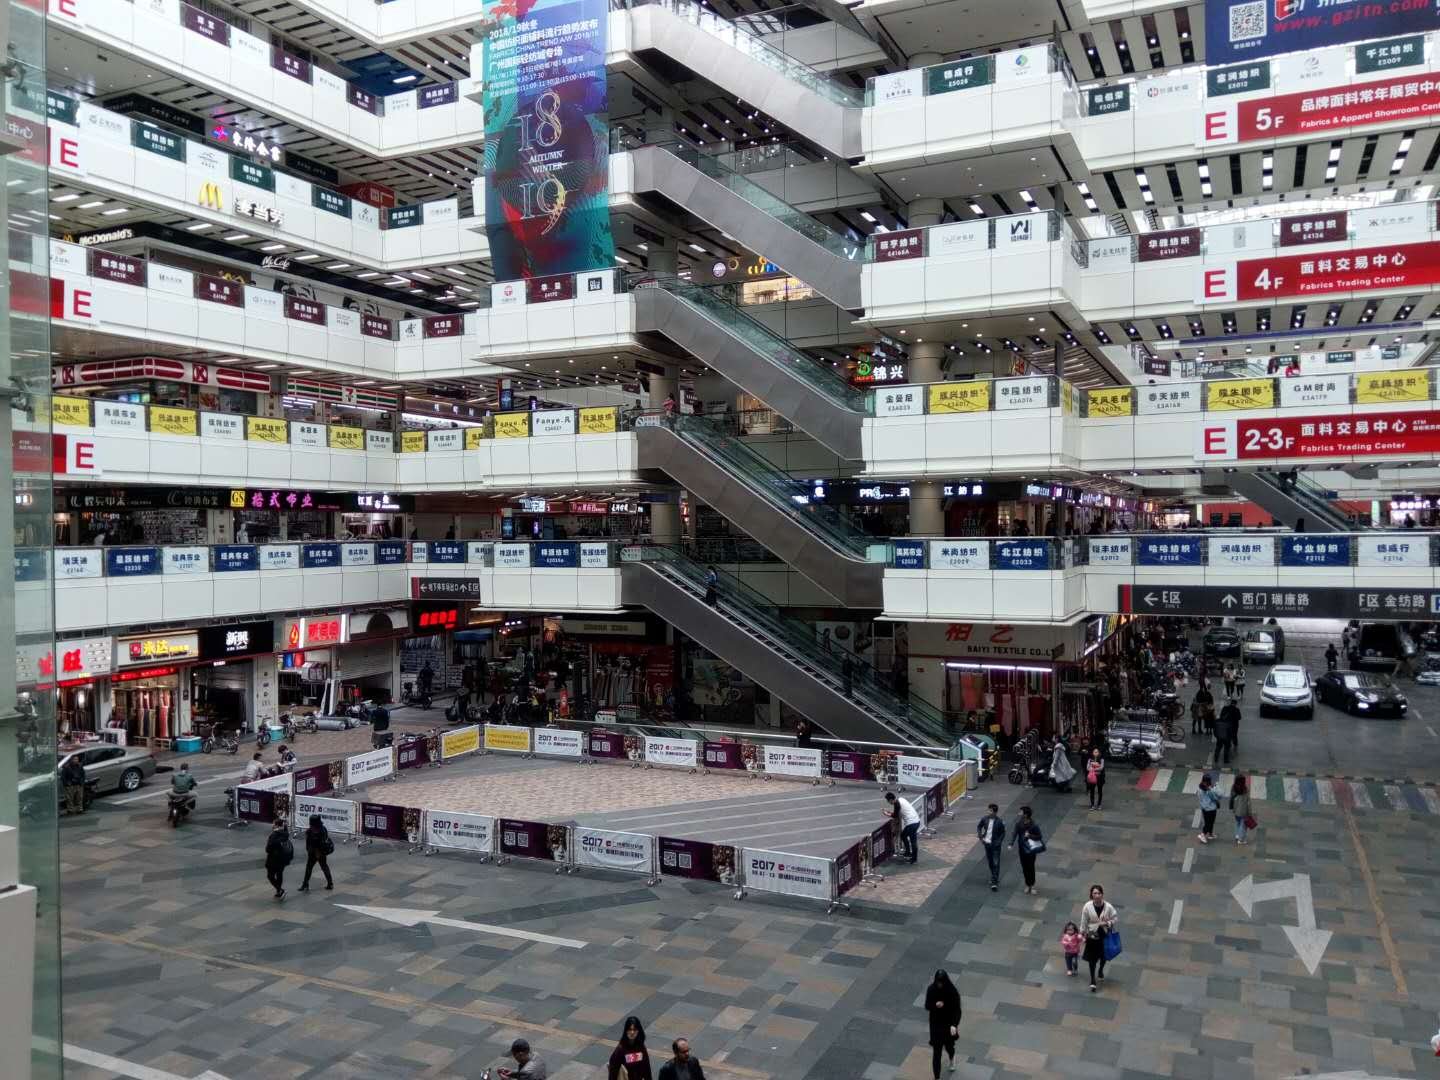 Guangzhou international fabric market